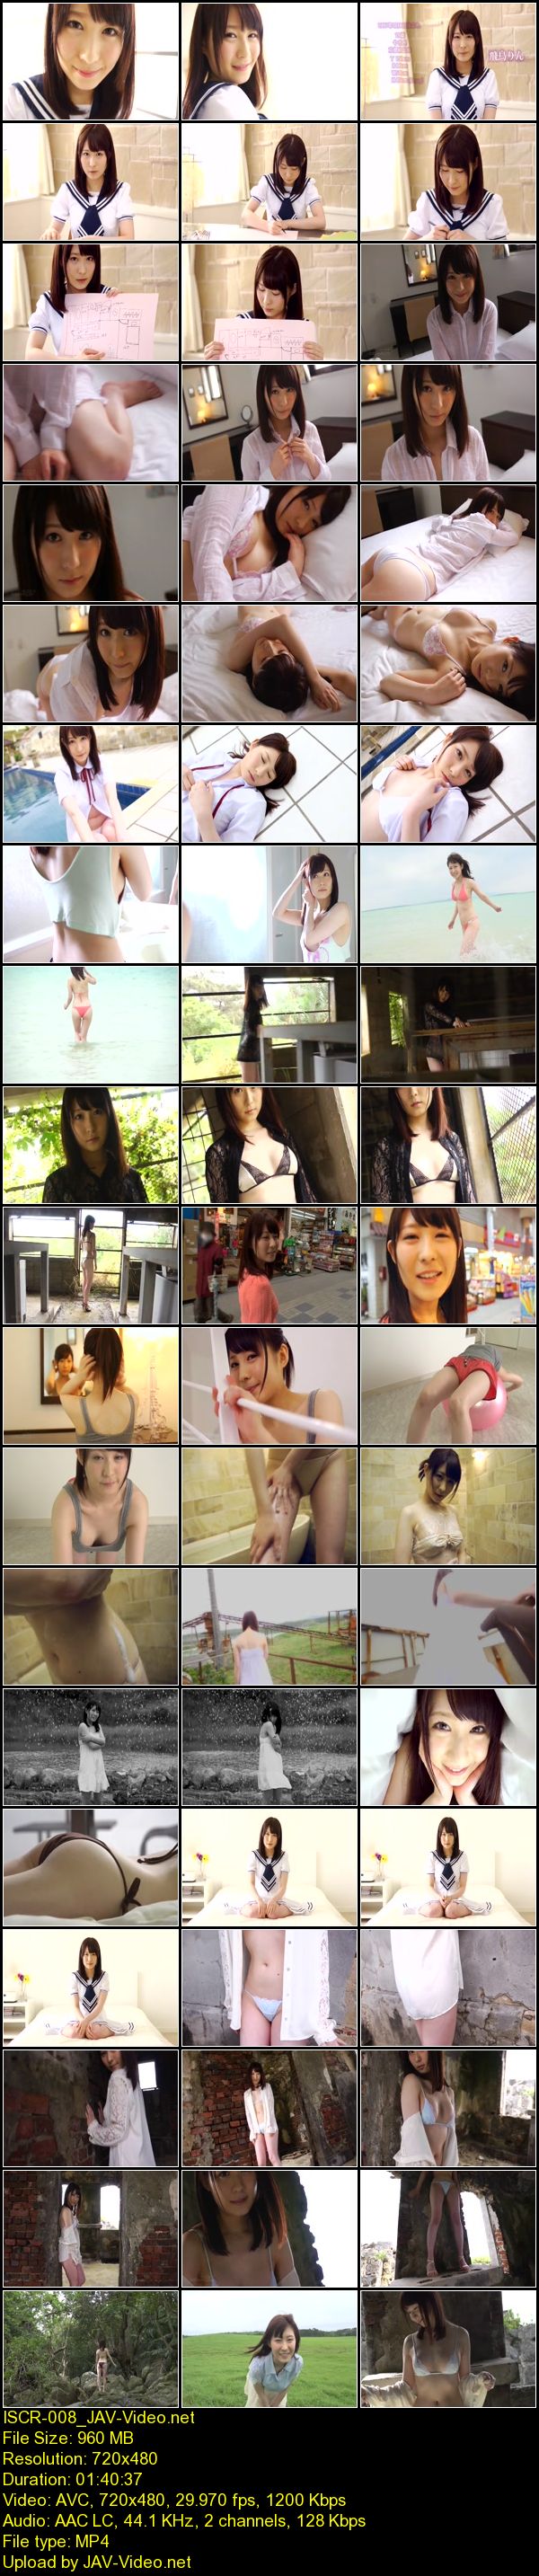 Download Japanese Adult Video Rin Asuka [ISCR 008] 飛鳥りん IDOL Debut Image 2016 05 26